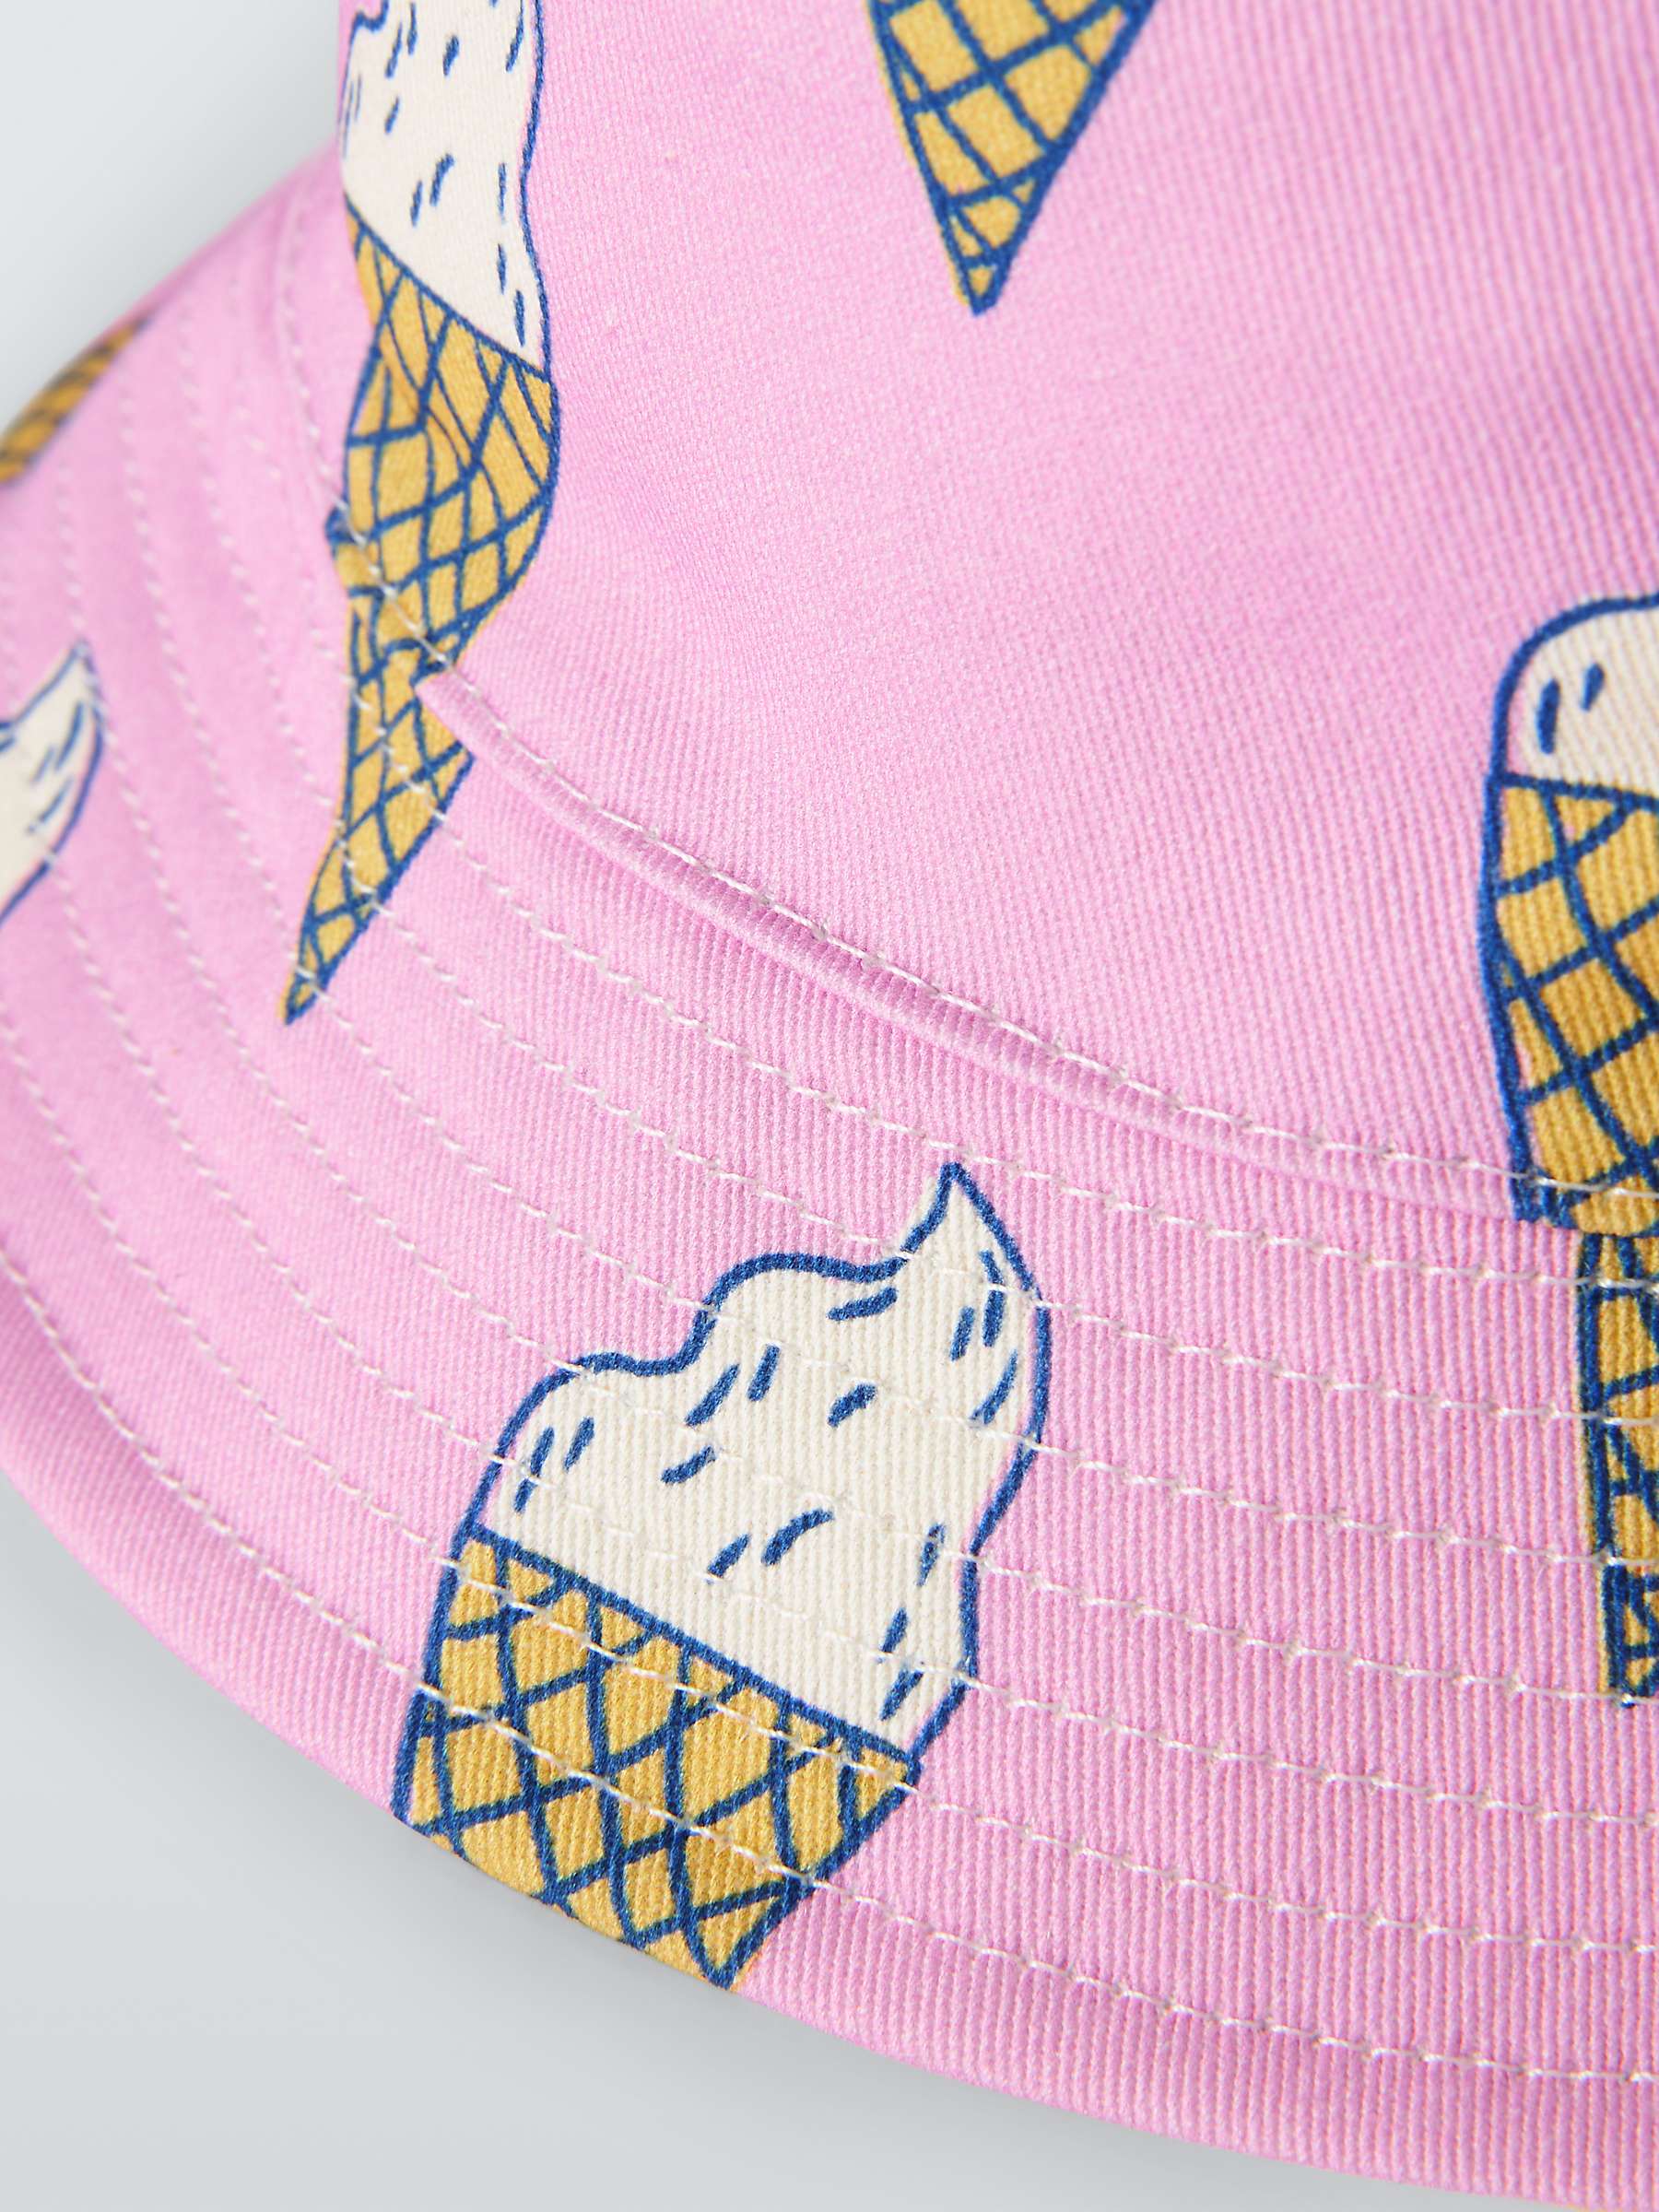 Buy John Lewis ANYDAY Baby Reversible Ice Cream Bucket Hat, Pink Online at johnlewis.com